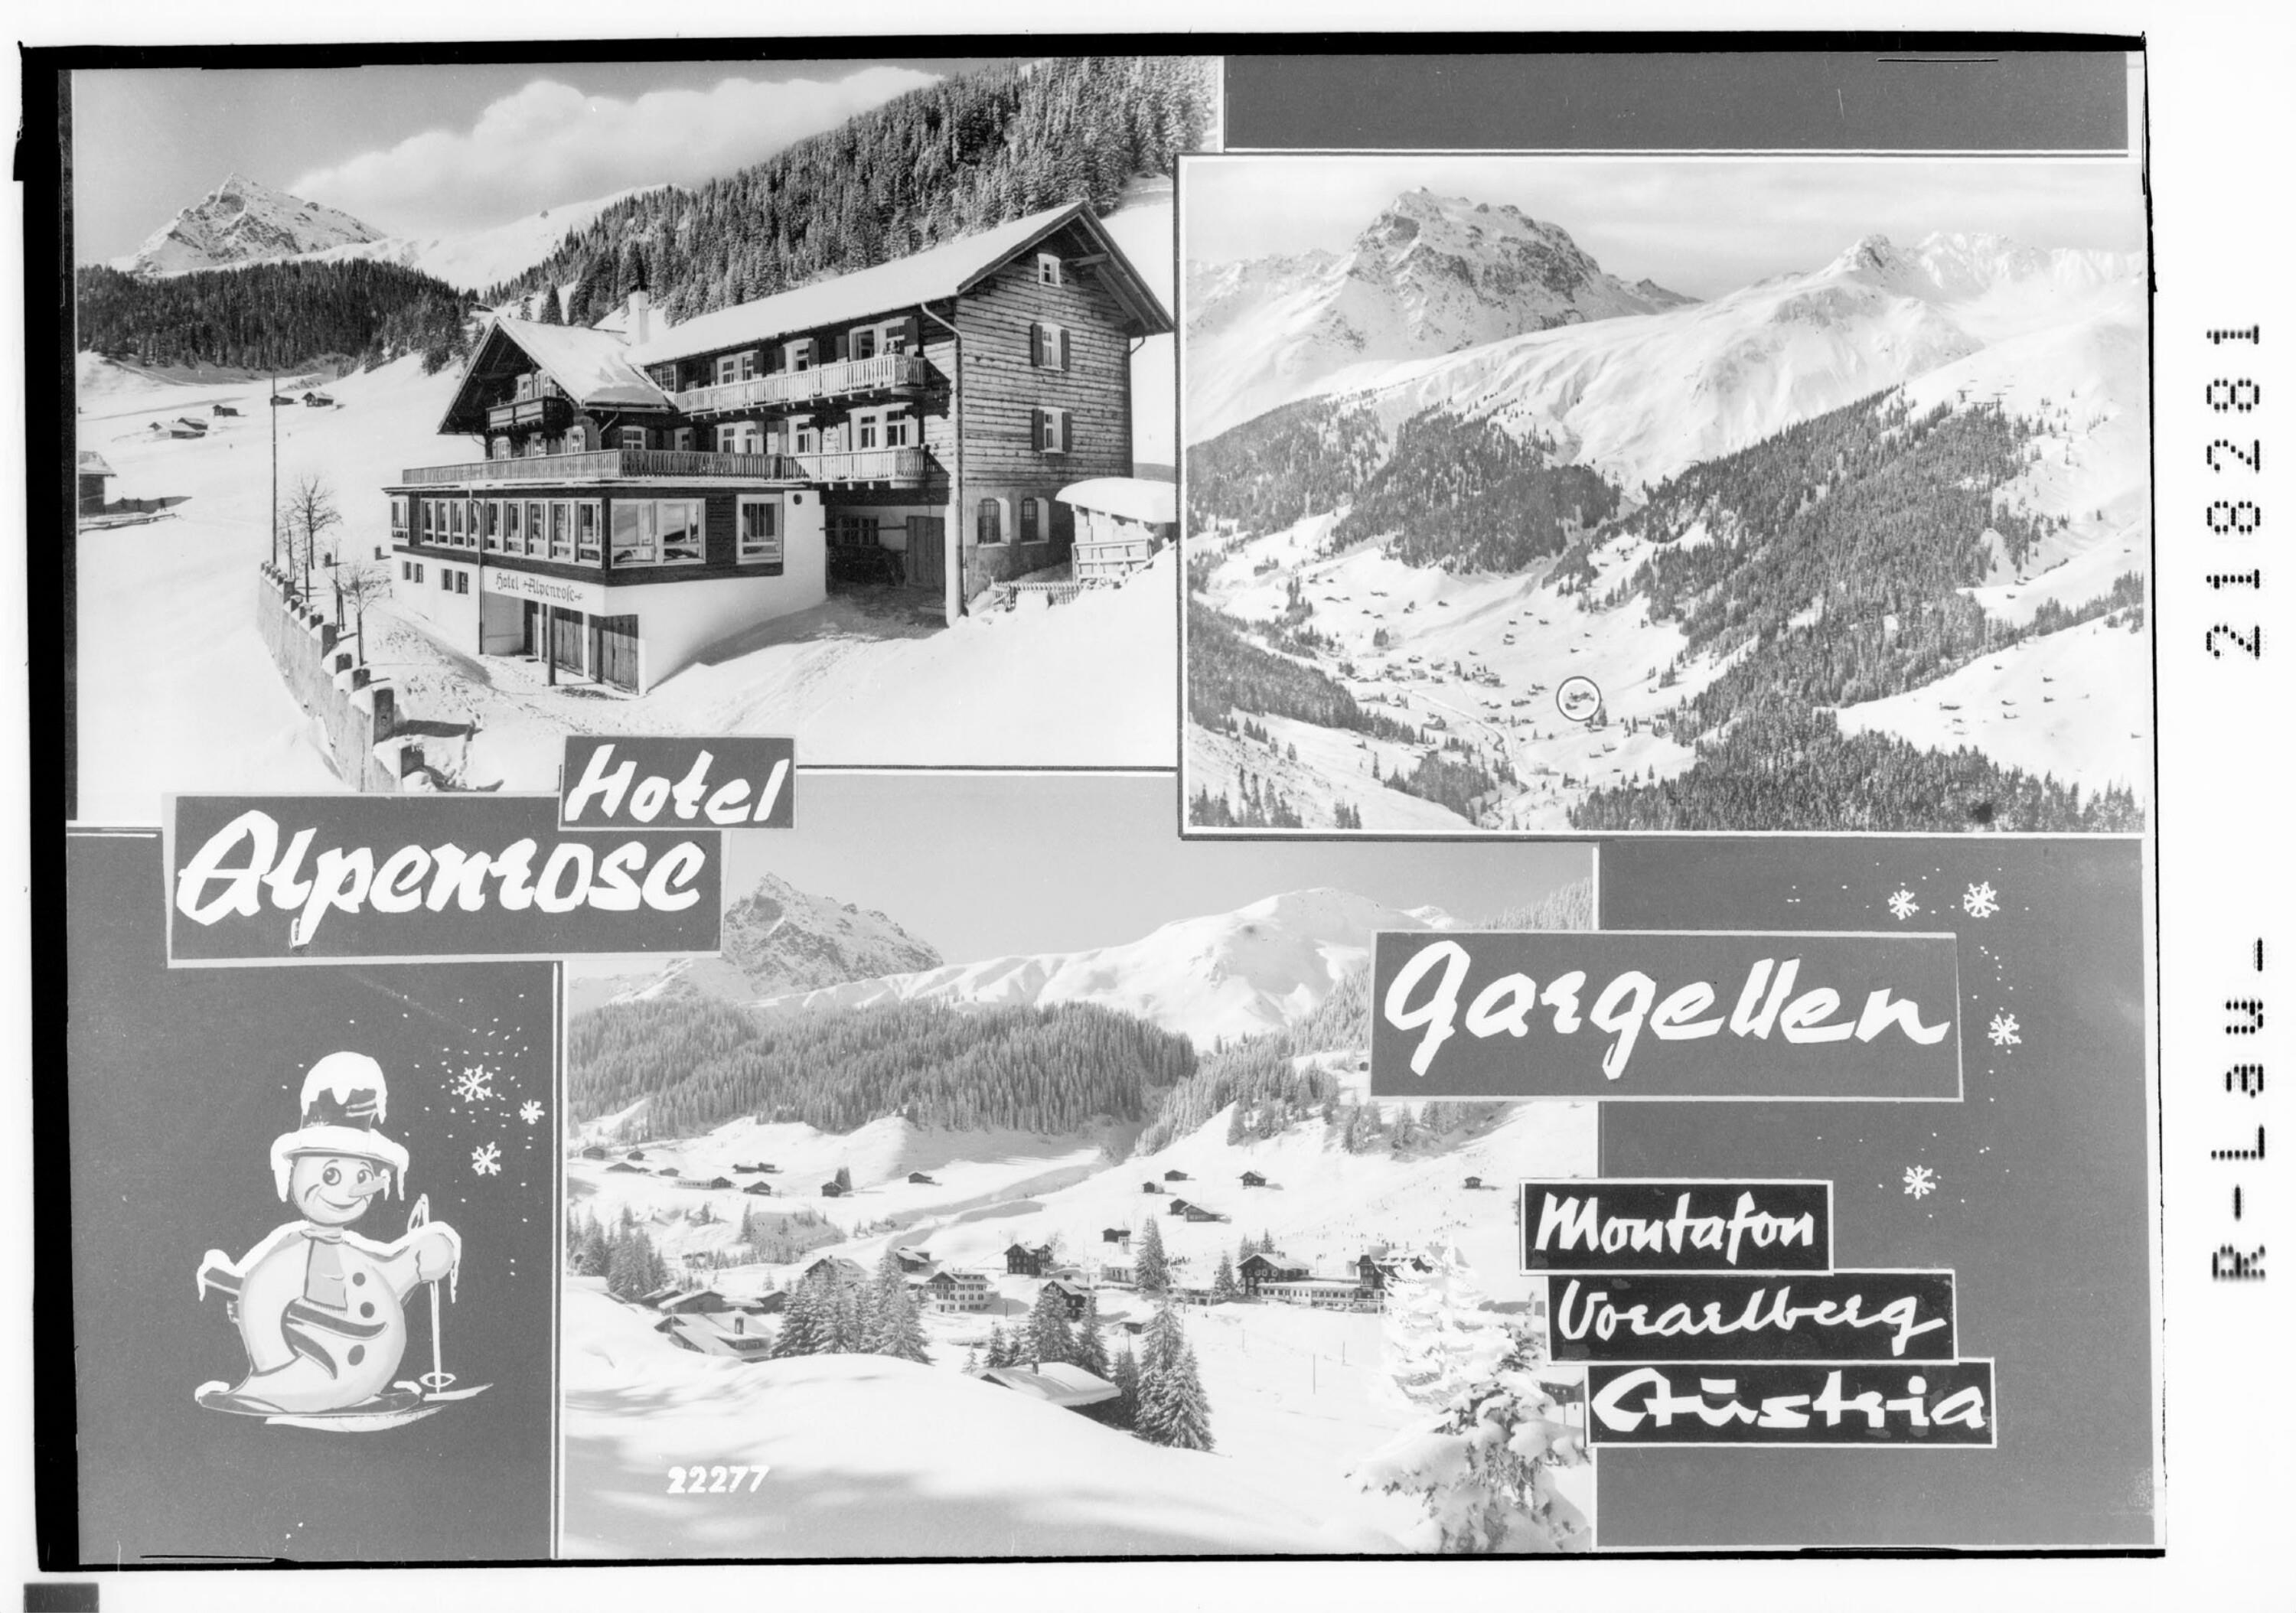 Hotel Alpenrose Gargellen Montafon Vorarlberg Austria></div>


    <hr>
    <div class=